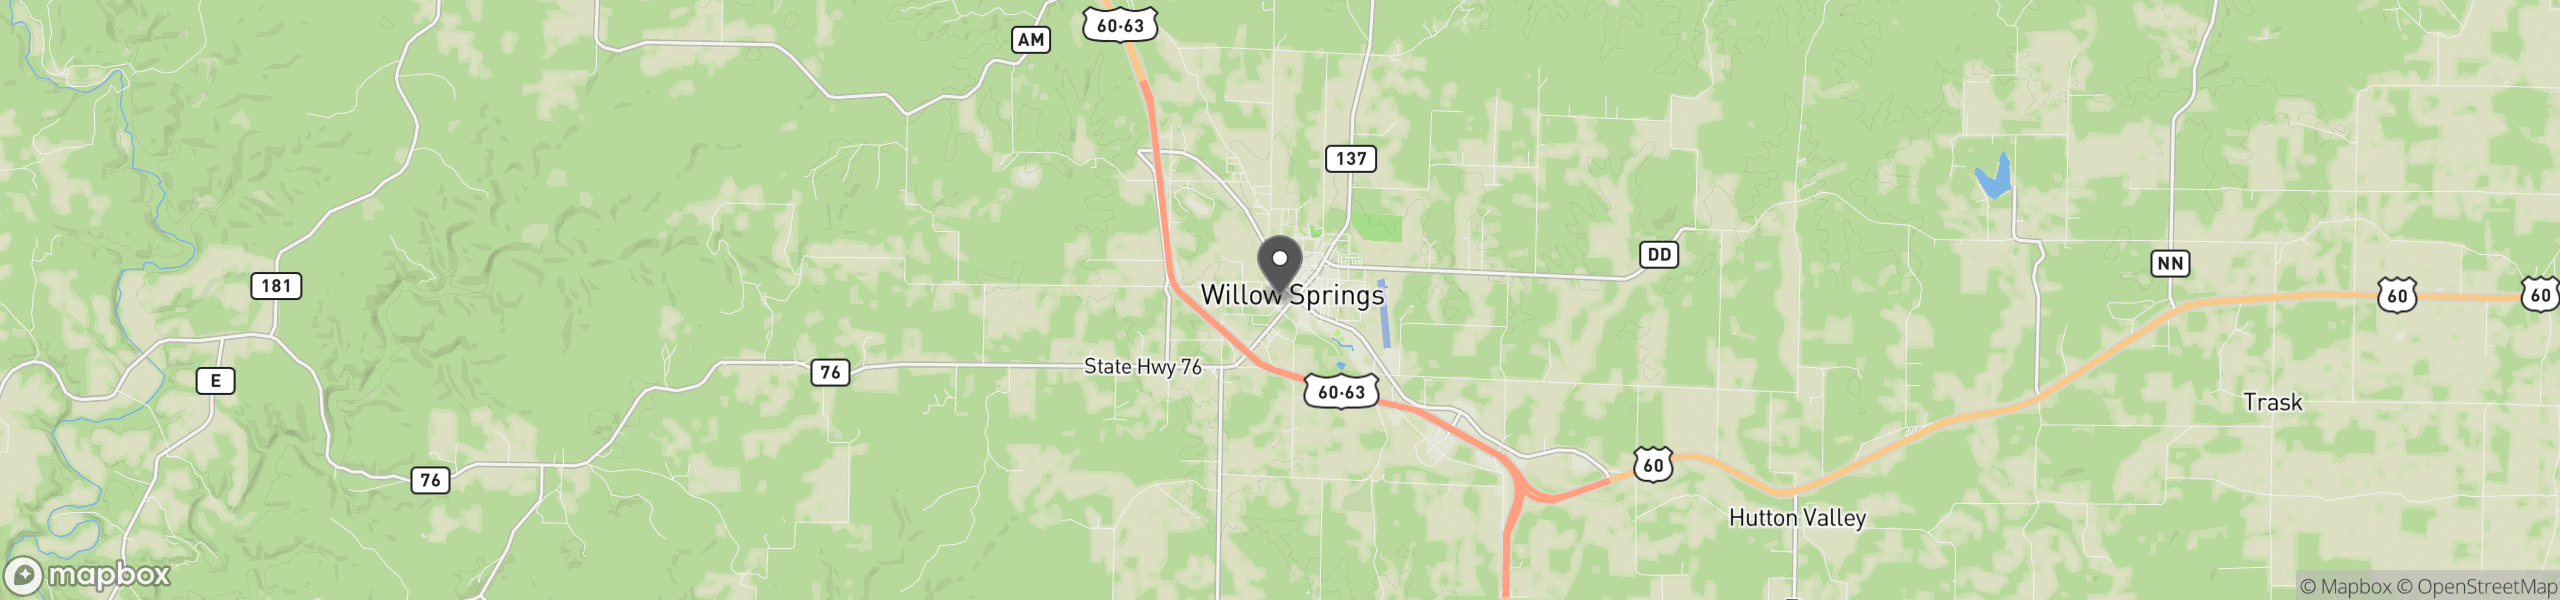 Willow Springs, MO 65793